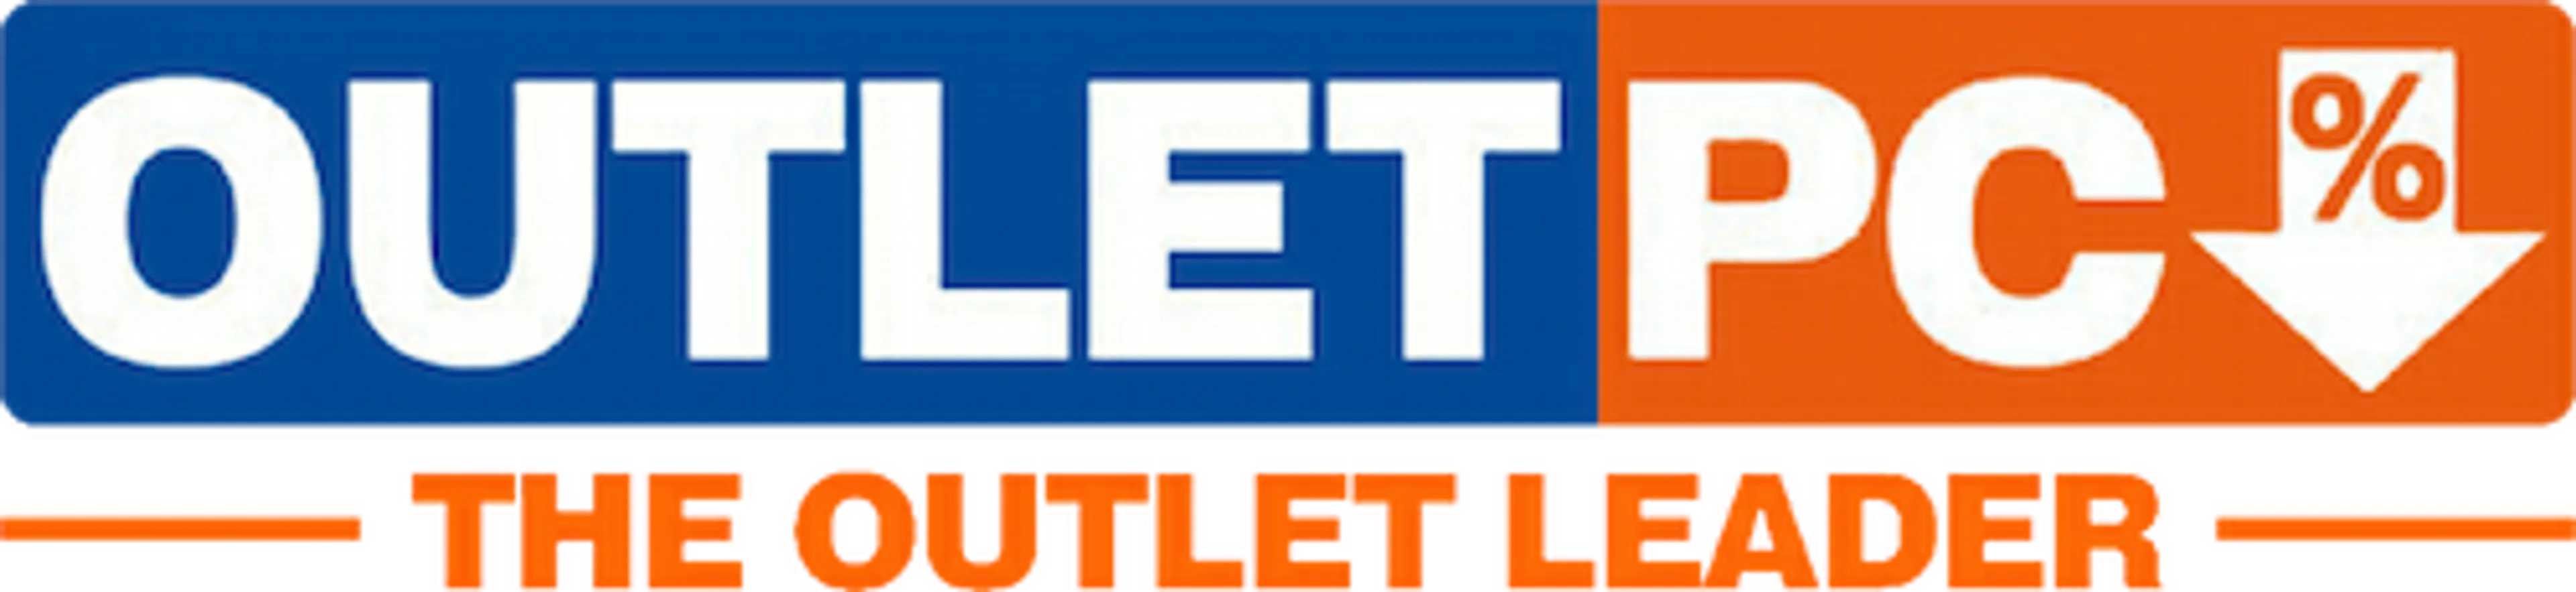 OUTLET PC logo